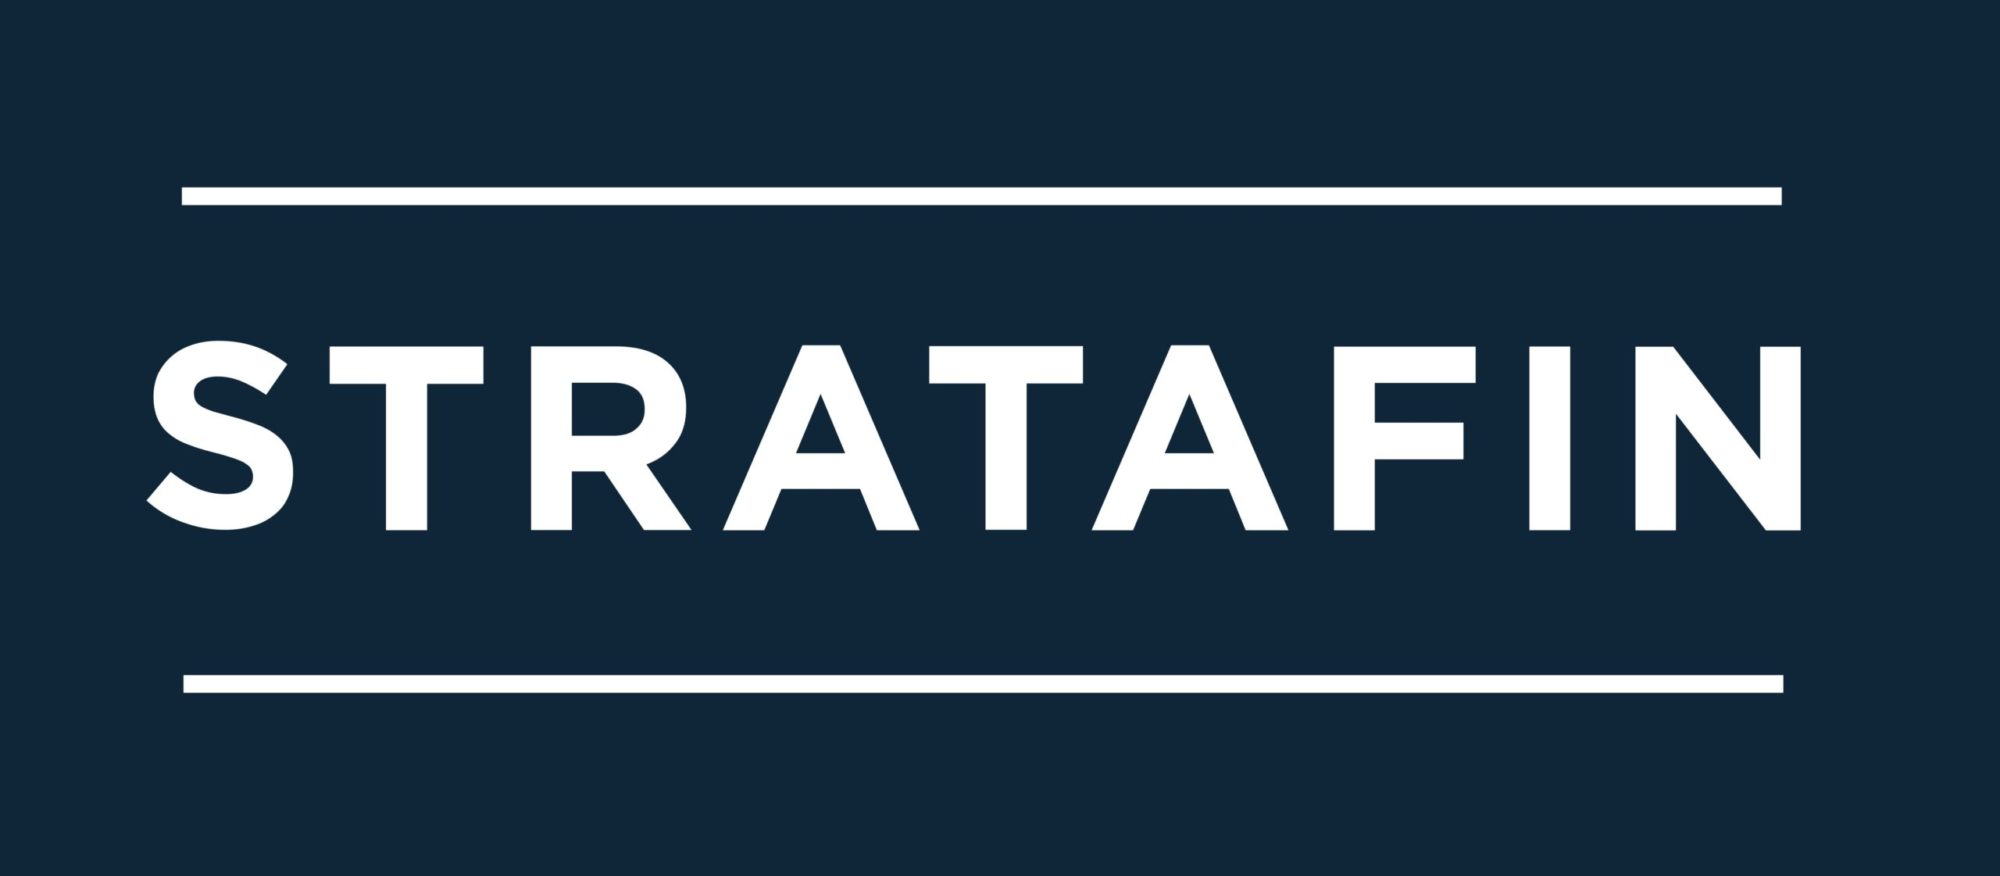 Stratafin Training Portal logo